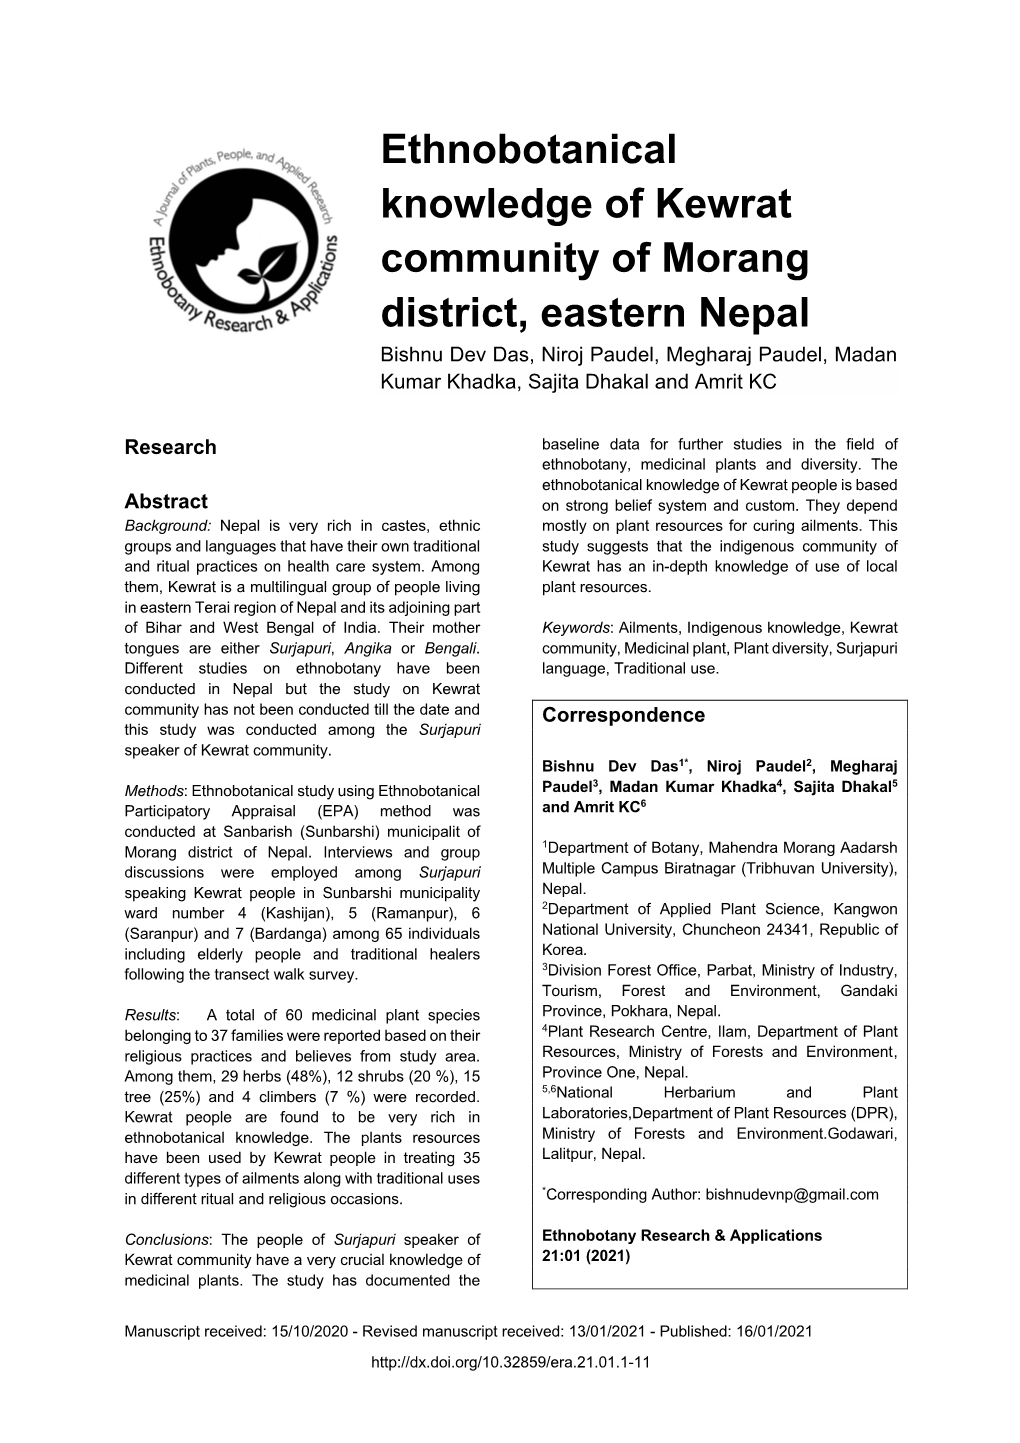 Ethnobotanical Knowledge of Kewrat Community of Morang District, Eastern Nepal Bishnu Dev Das, Niroj Paudel, Megharaj Paudel, Madan